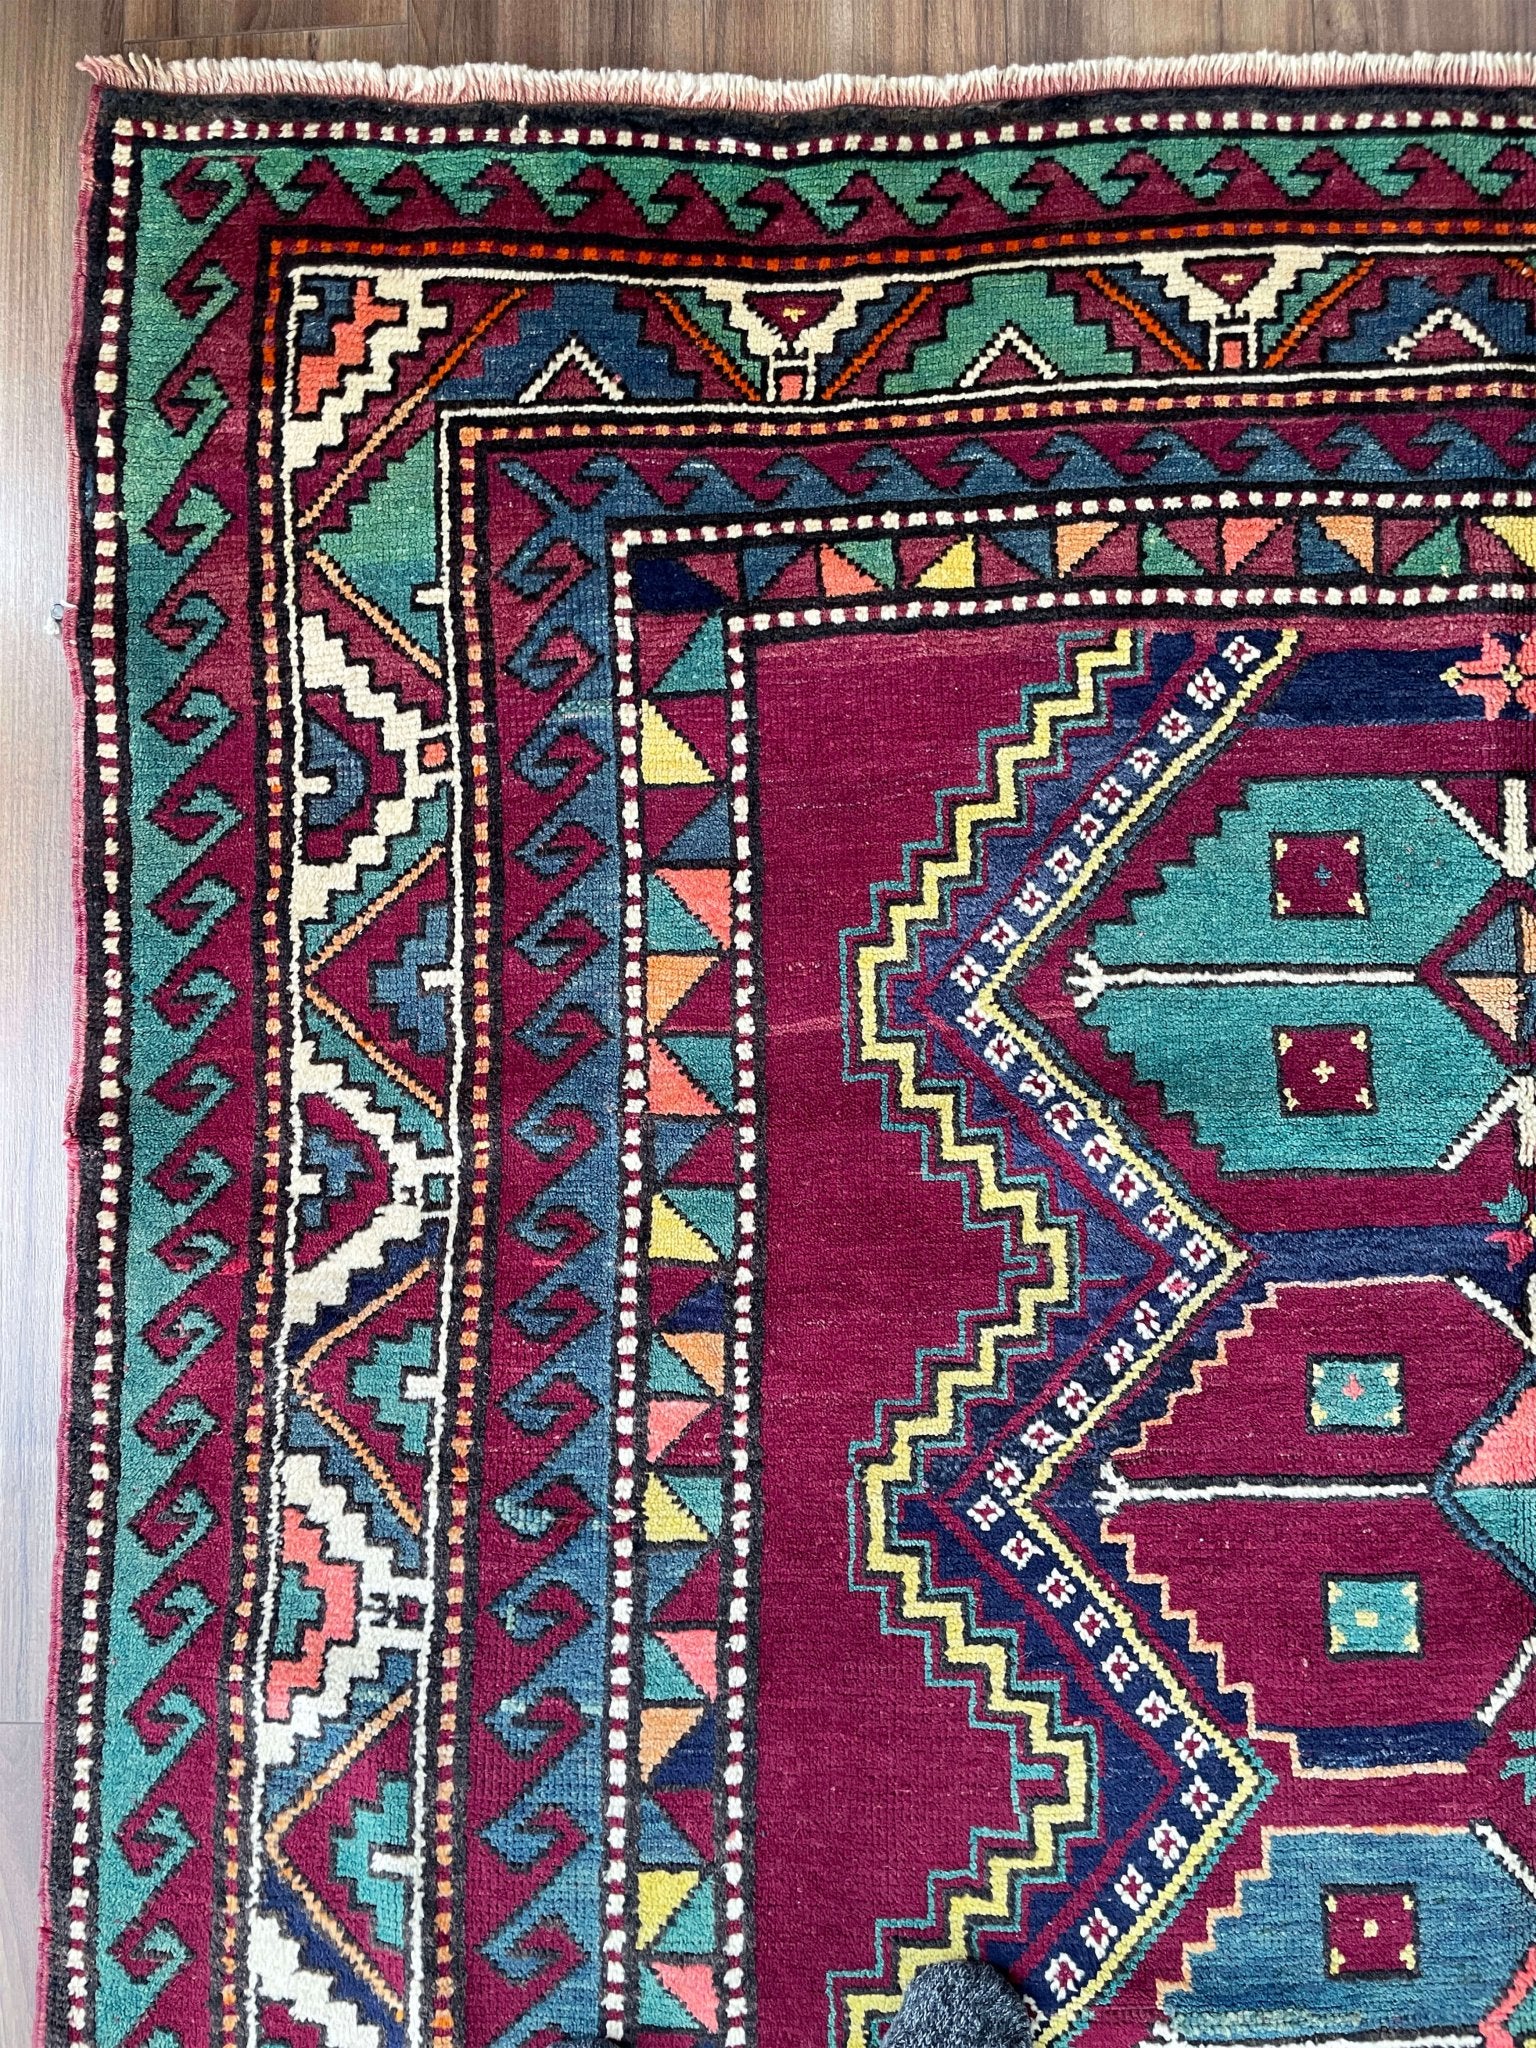 Kazak Caucasian Tribal Vintage Rug Shop San Francisco Bay Area. Buy handmade wool rug online free shipping USA and Canada.